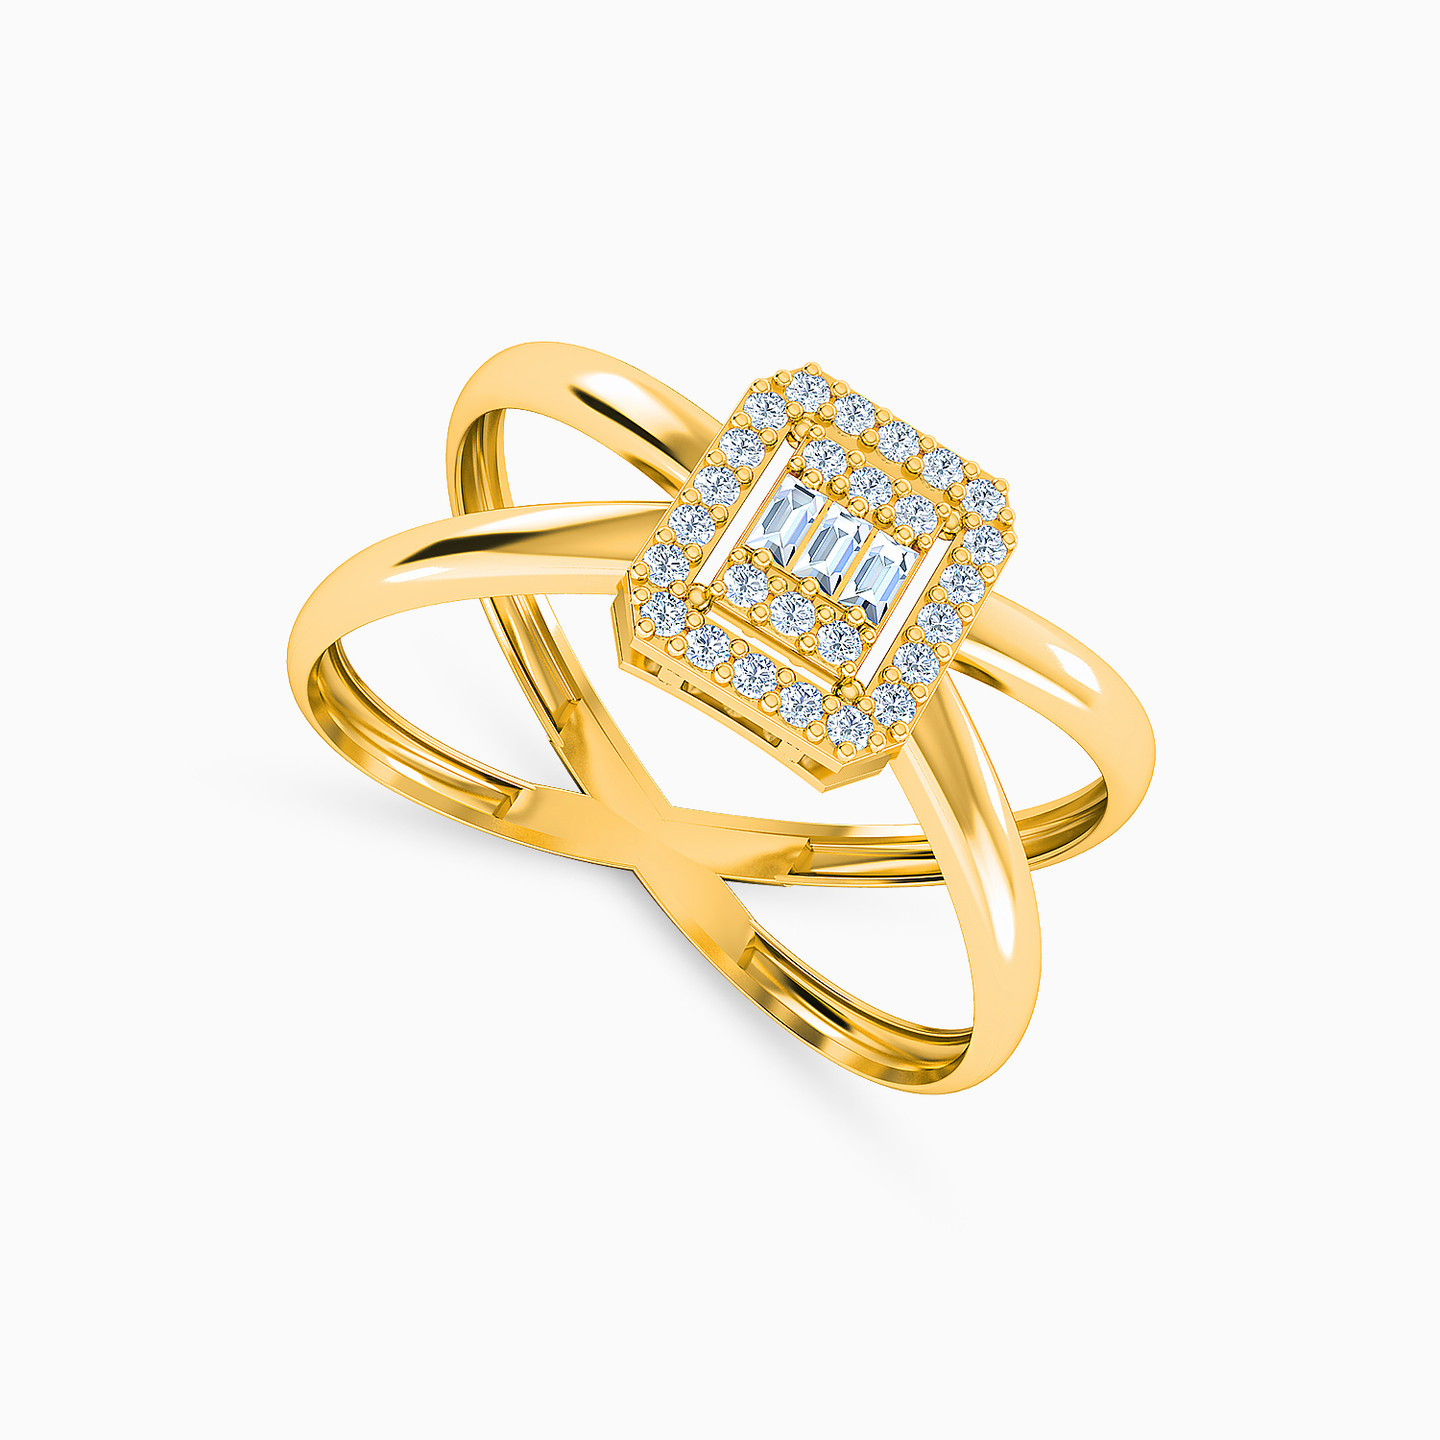 21K Gold Cubic Zirconia Statement Ring - 2